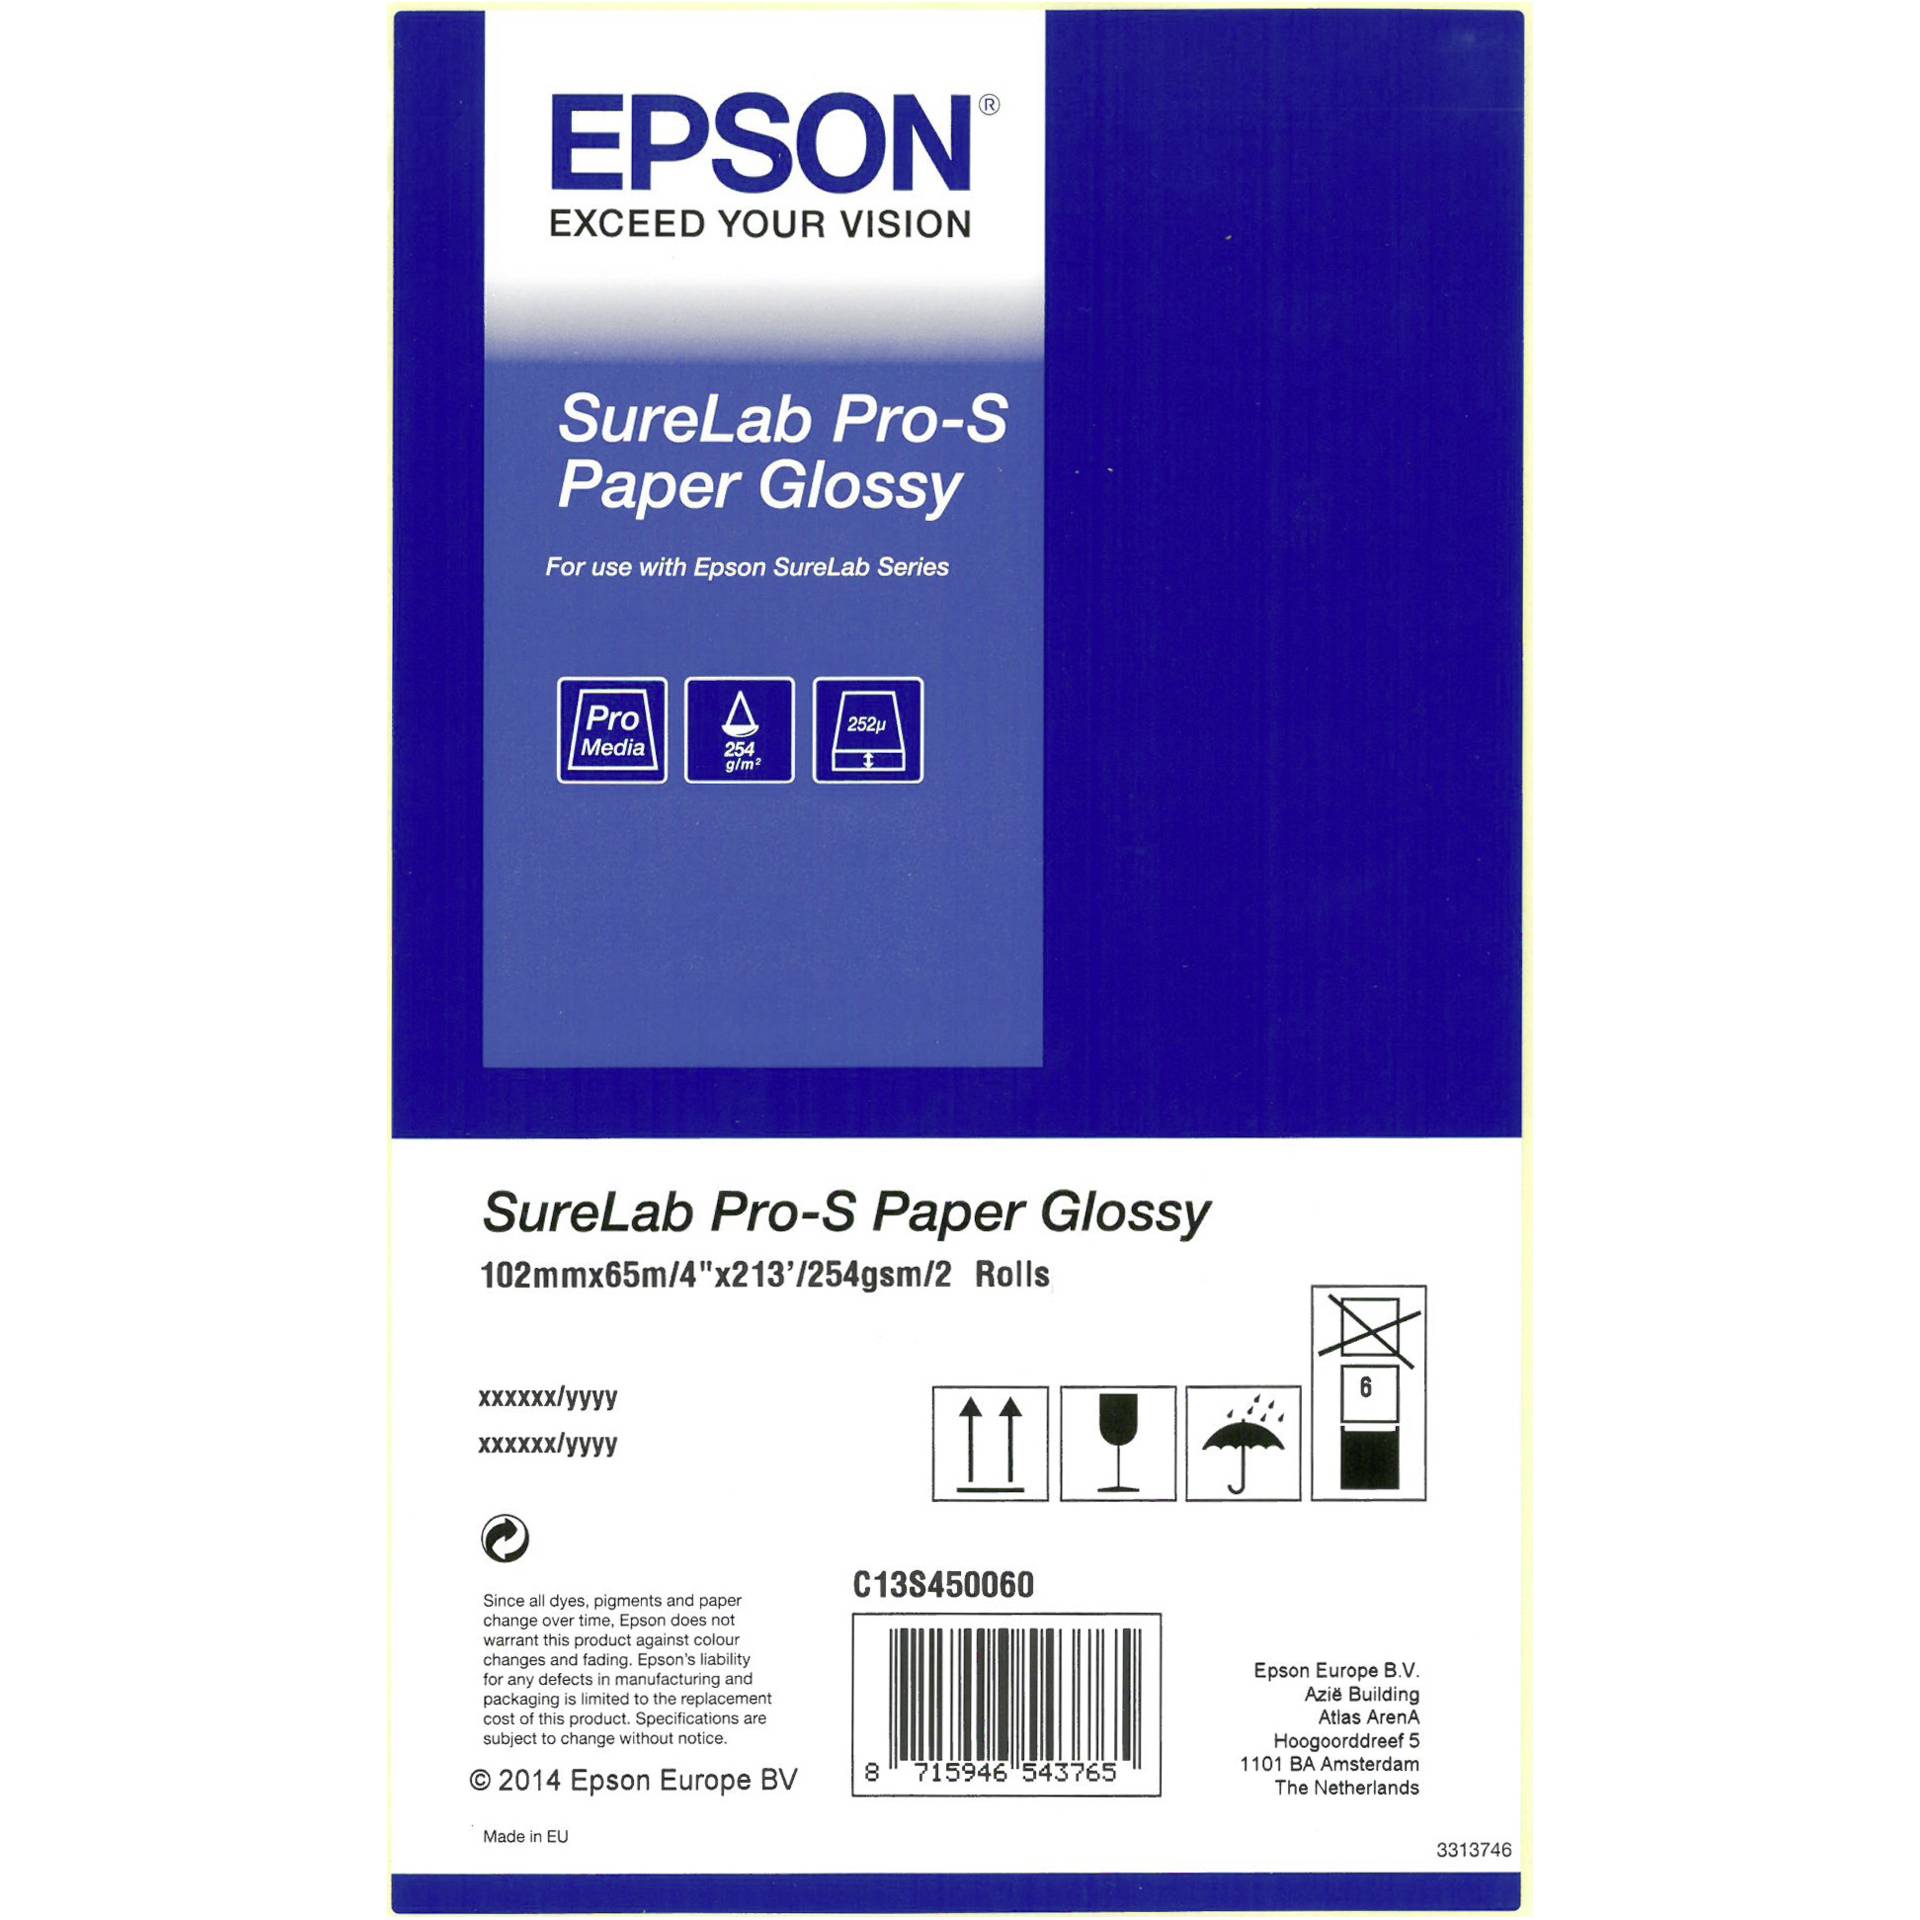 1x2 Epson SureLab Pro-S carta lucido 102 mm x 65 m 254 g BP